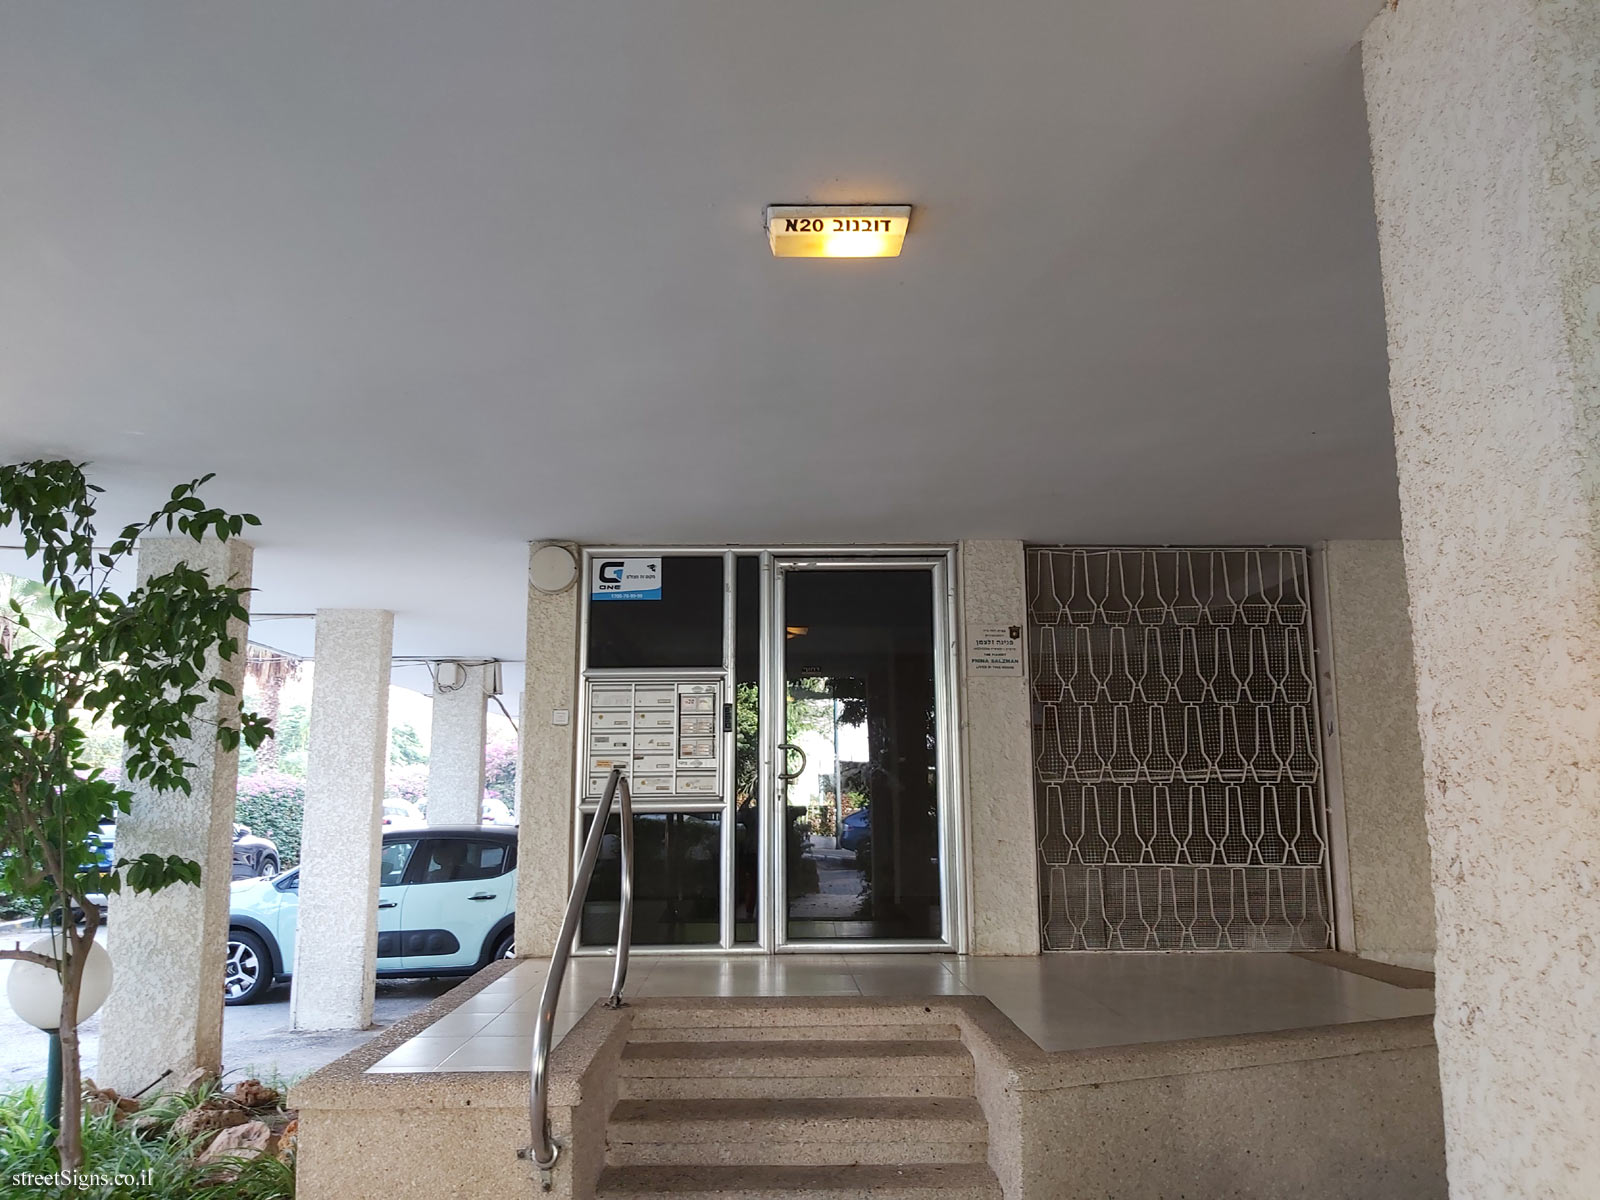 The house of Pnina Salzman - Dubnov St 20, Tel Aviv-Yafo, Israel